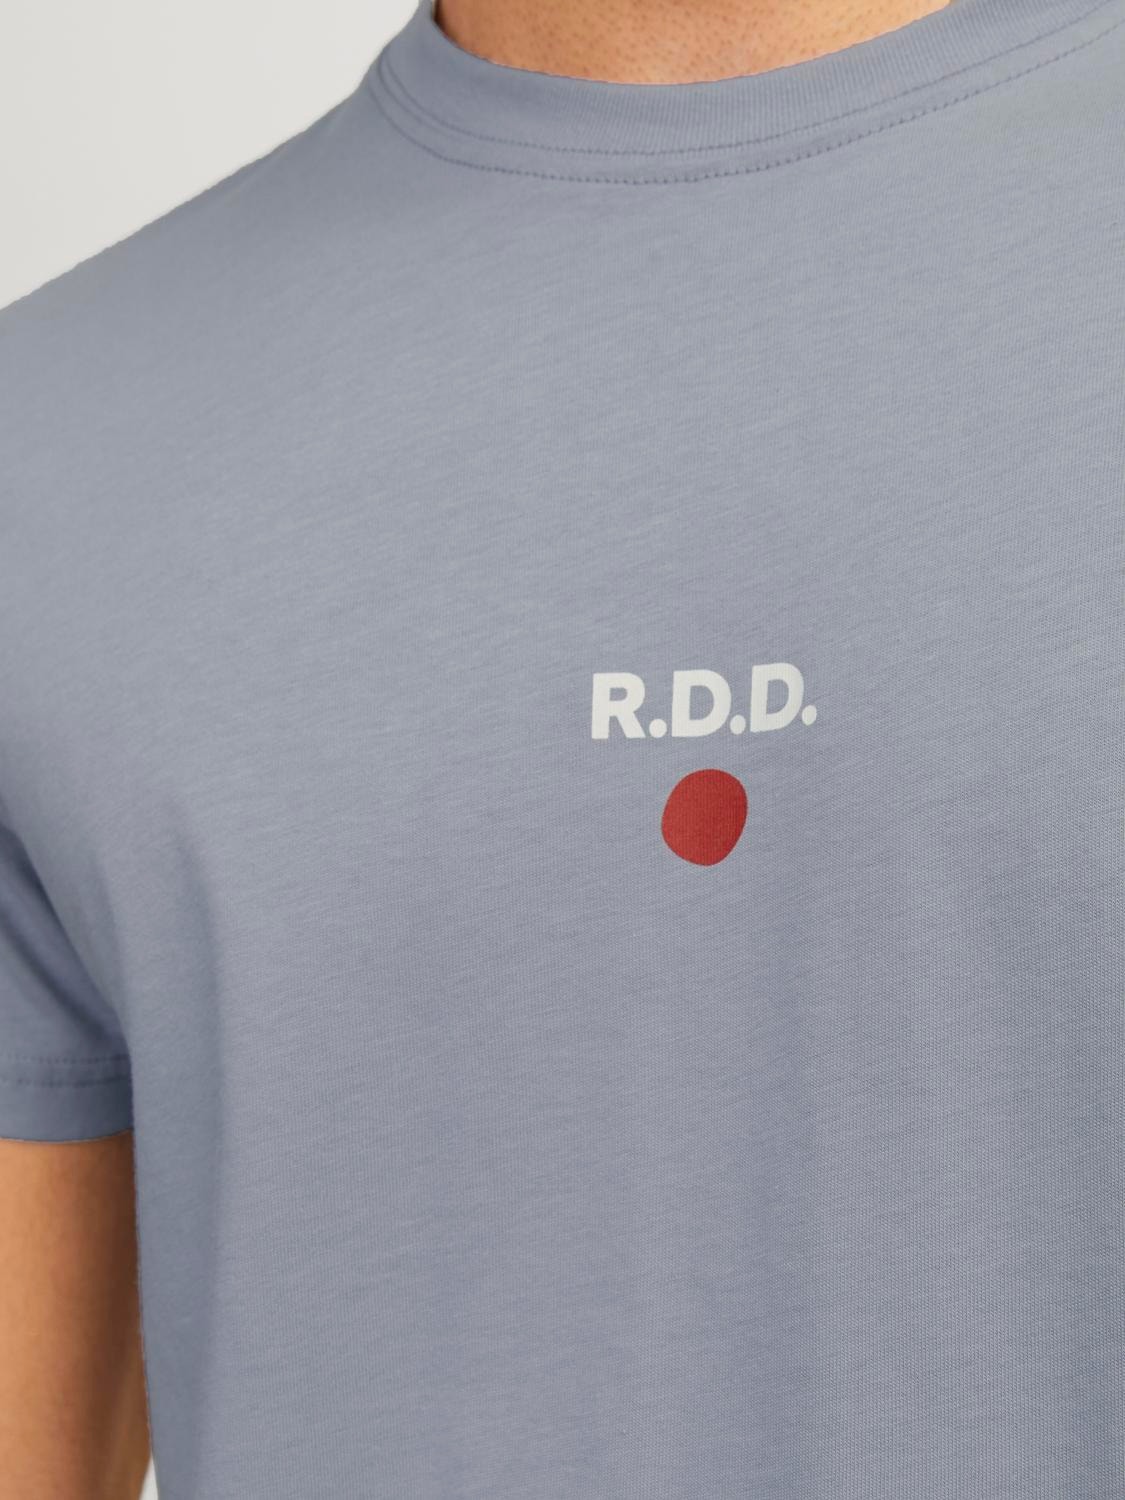 Jack & Jones RDD Gedruckt Rundhals T-shirt -Tradewinds - 12254550